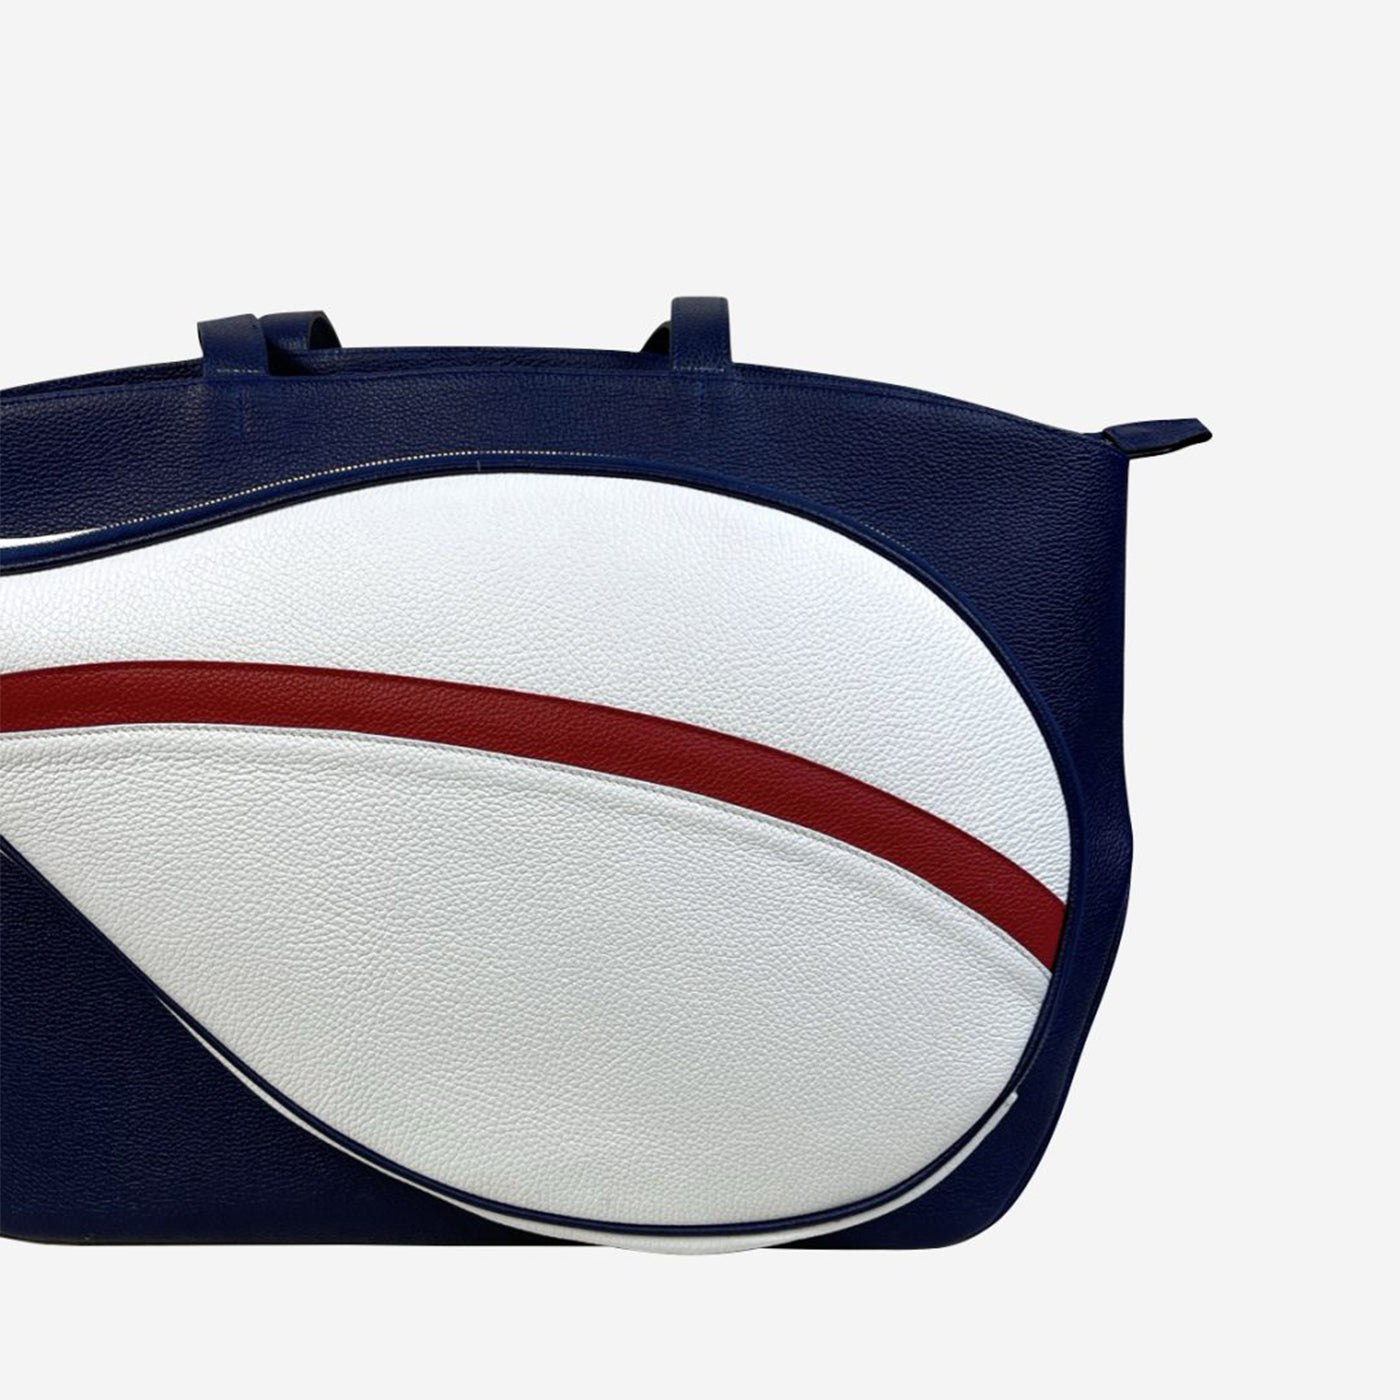 Borsa sportiva blu/rossa/bianca con tasca a forma di racchetta da tennis - Vista alternativa 1